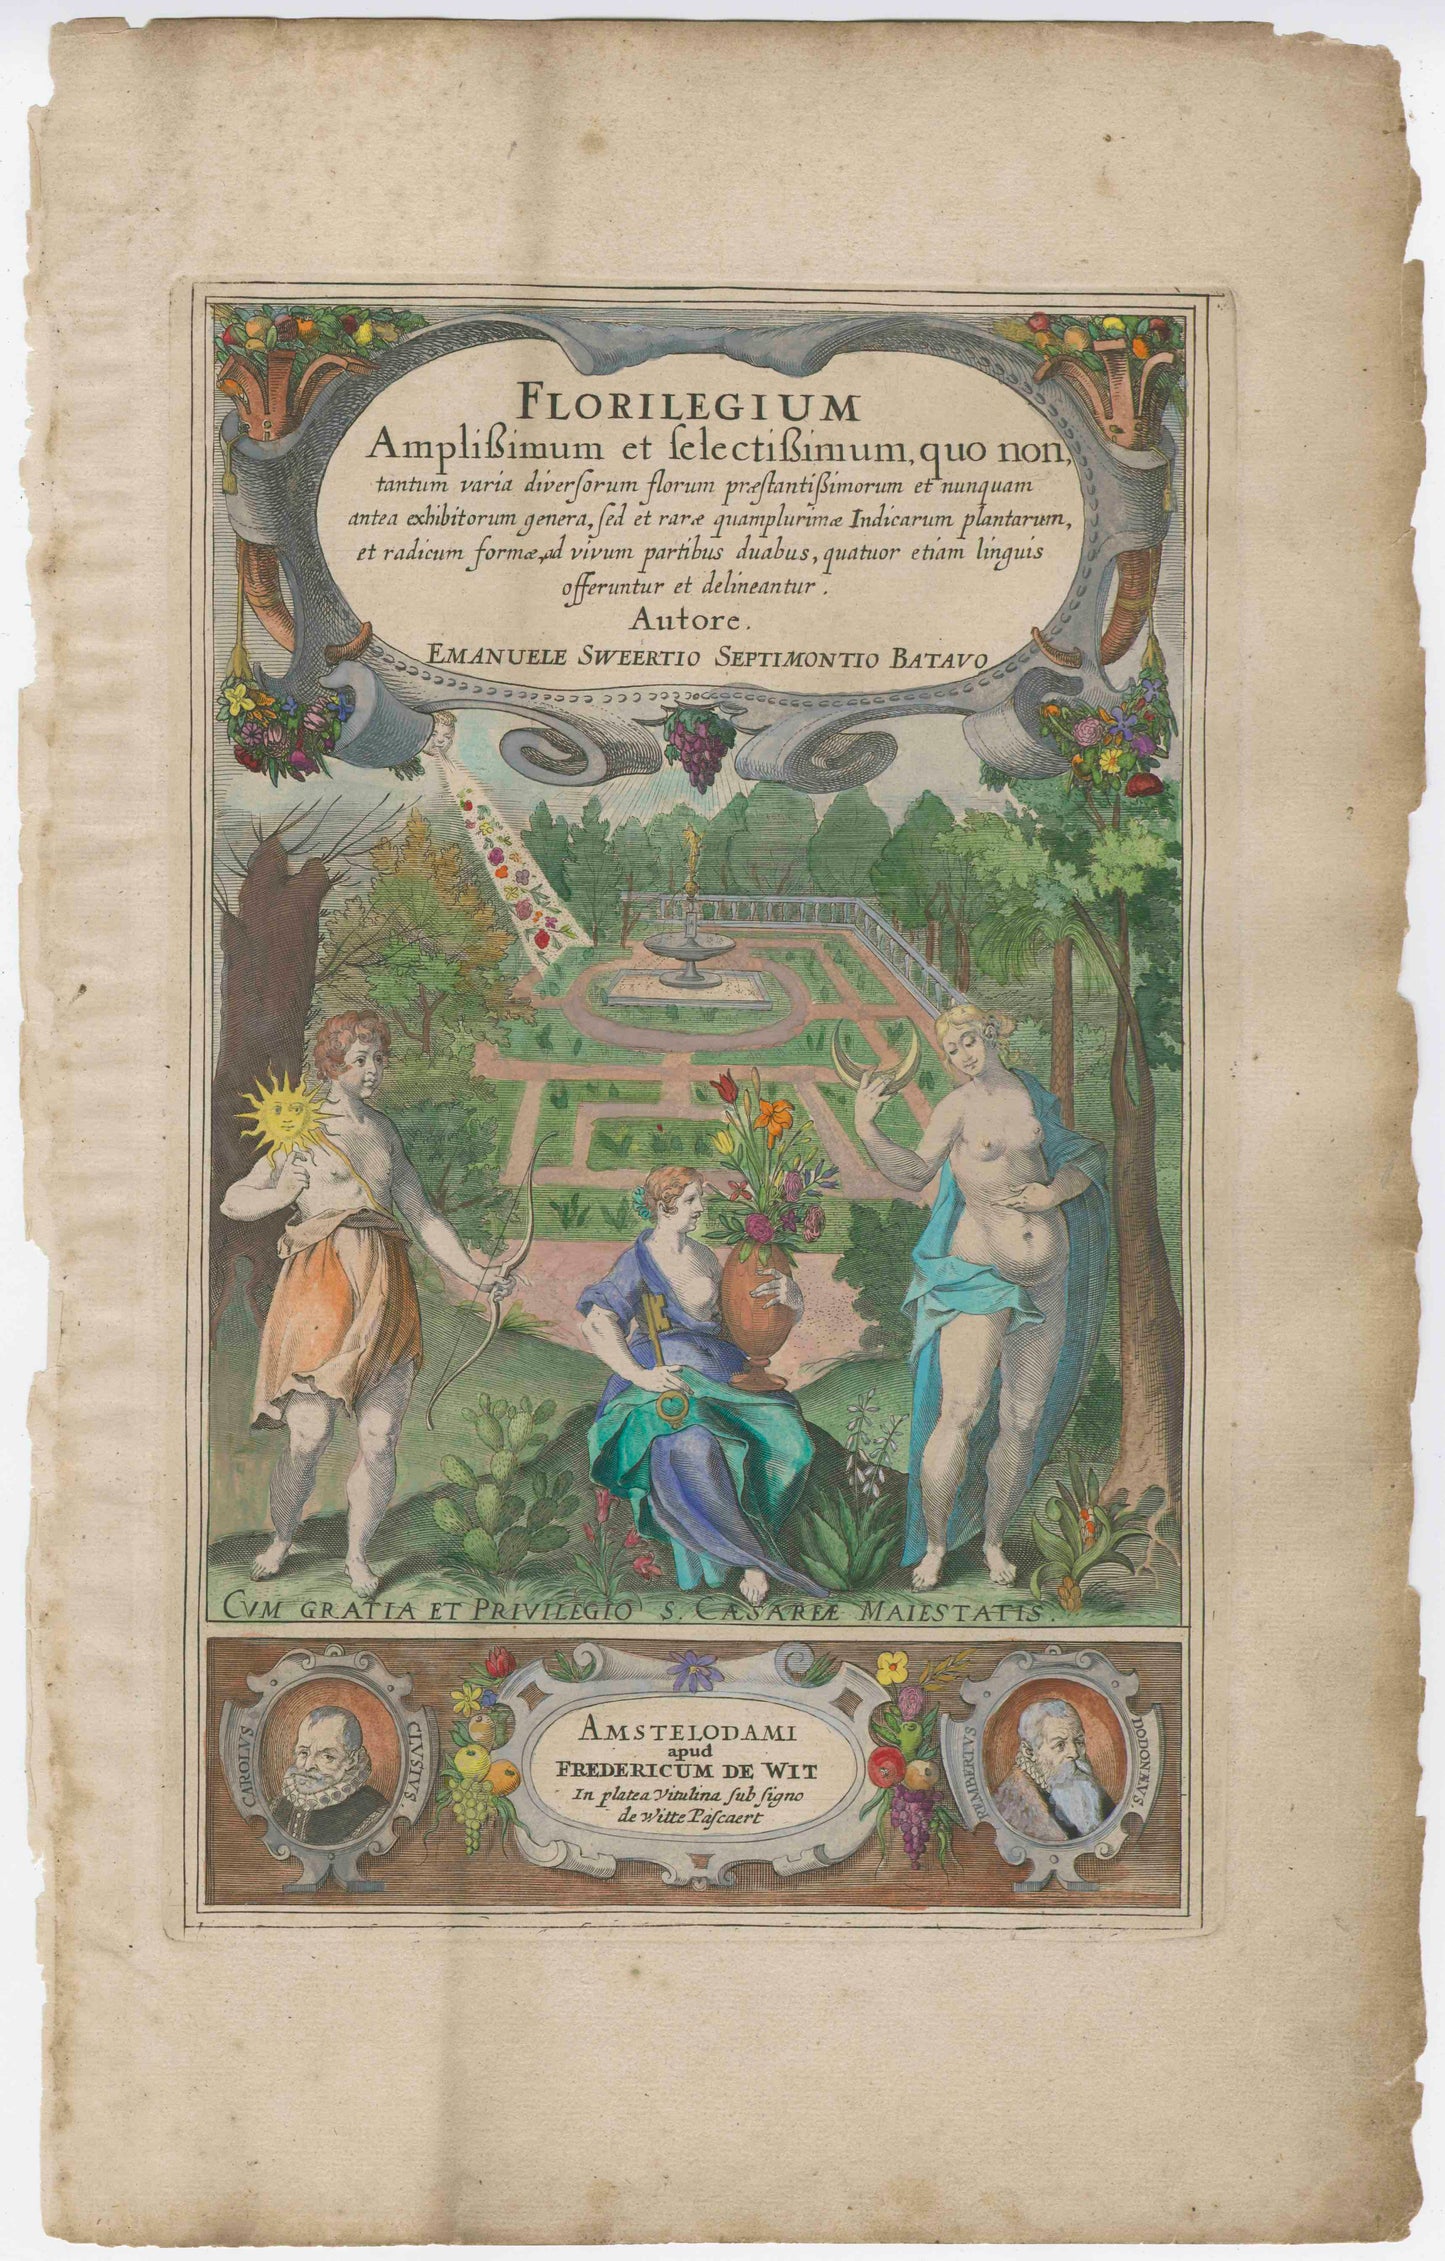 Emanuele Sweerts 17th Century "Florilegium" Print - Plate 64